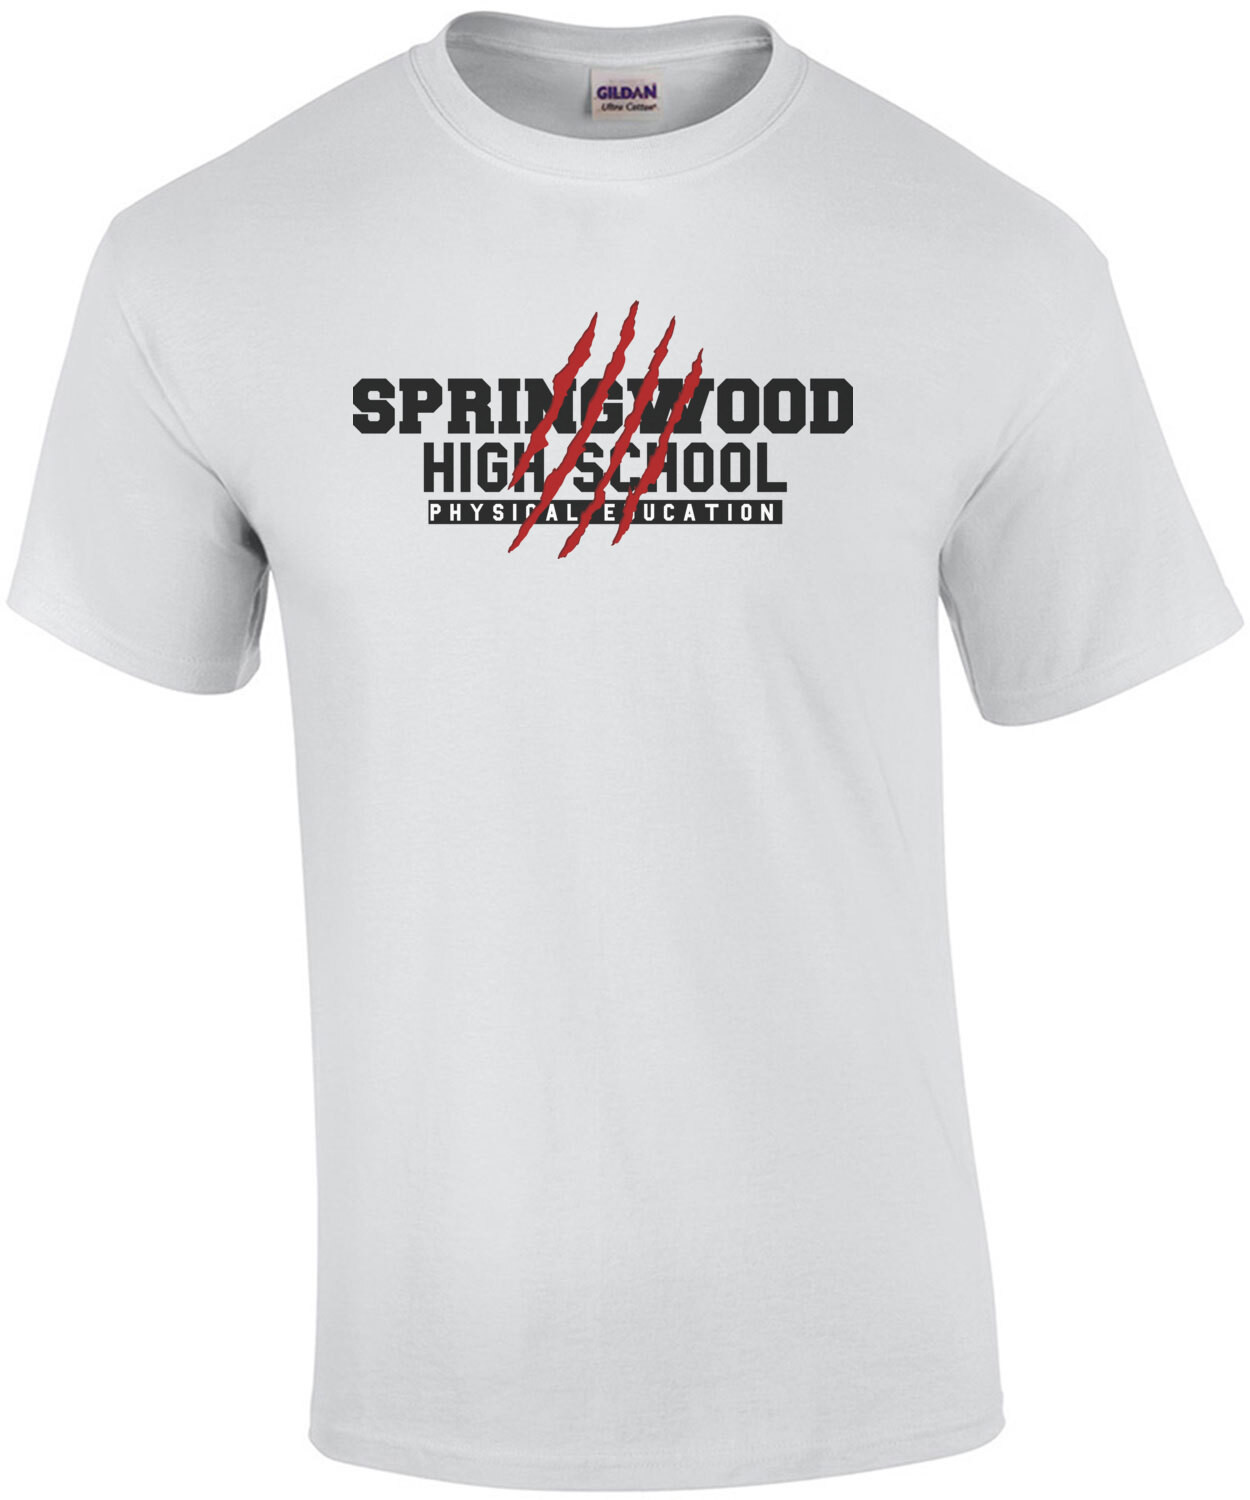 Springwood High School - Nightmare on Elm Street - 80's t-shirt